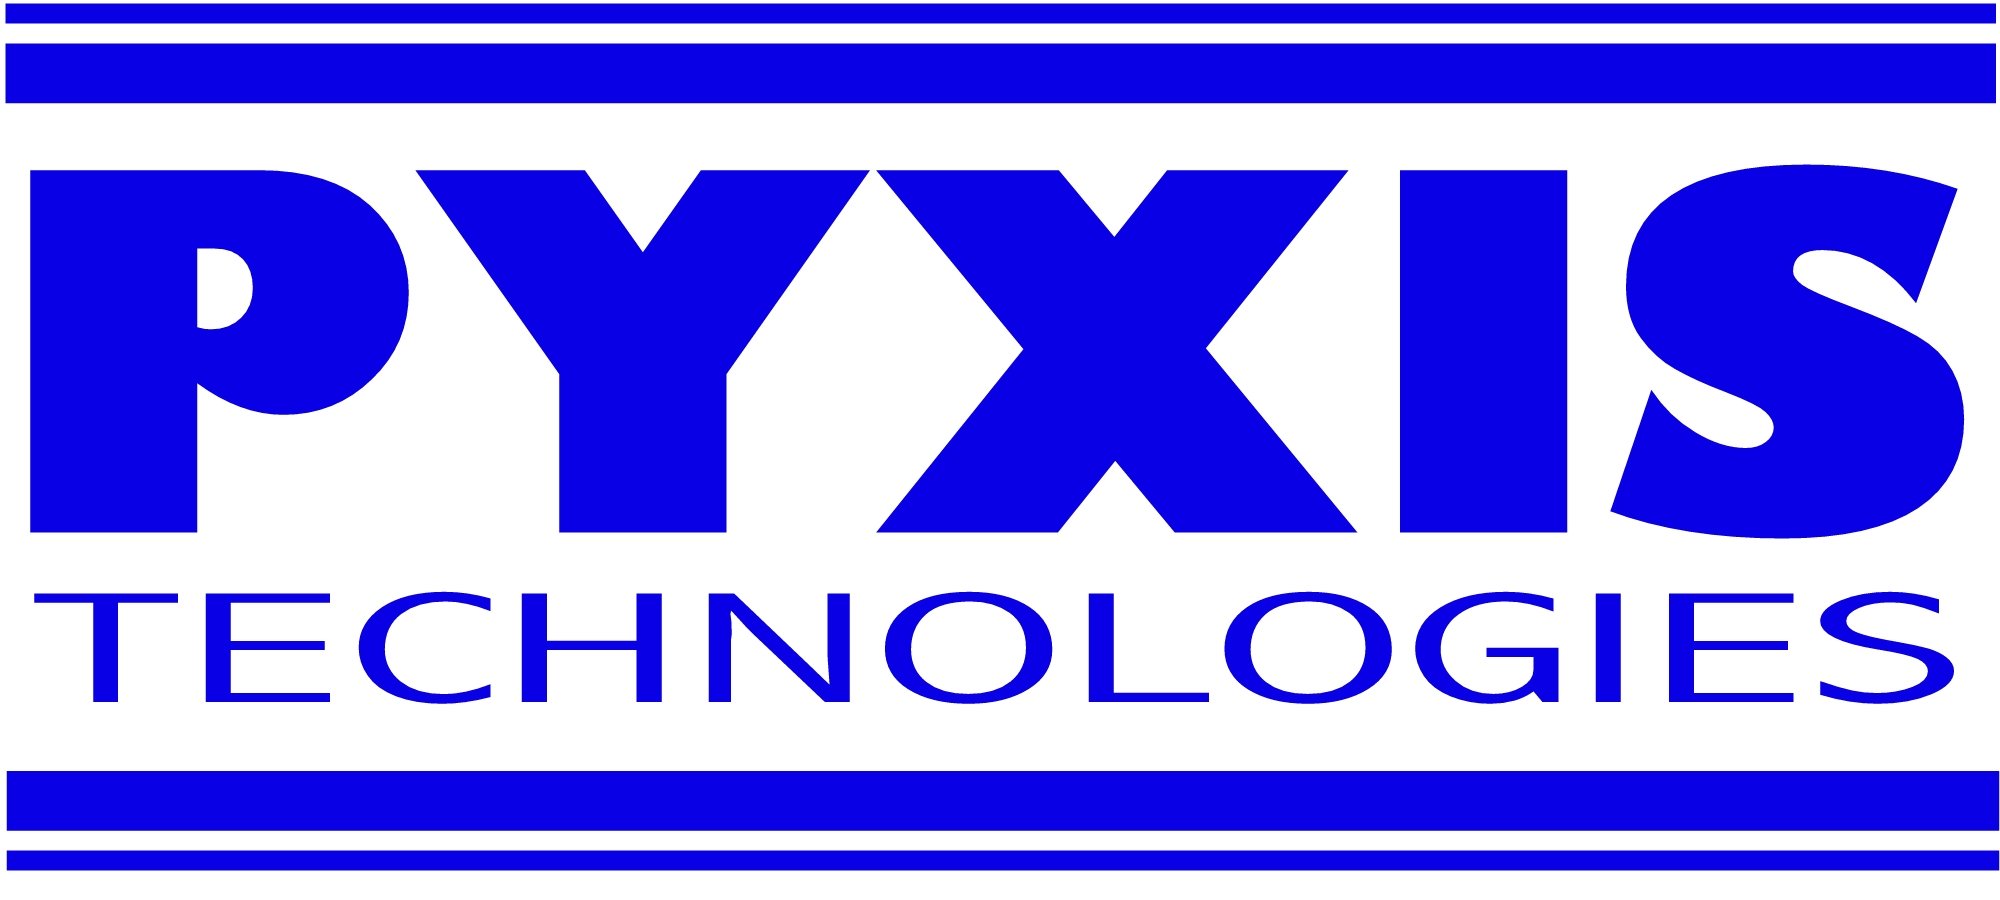 Pyxis Technologies.jpg